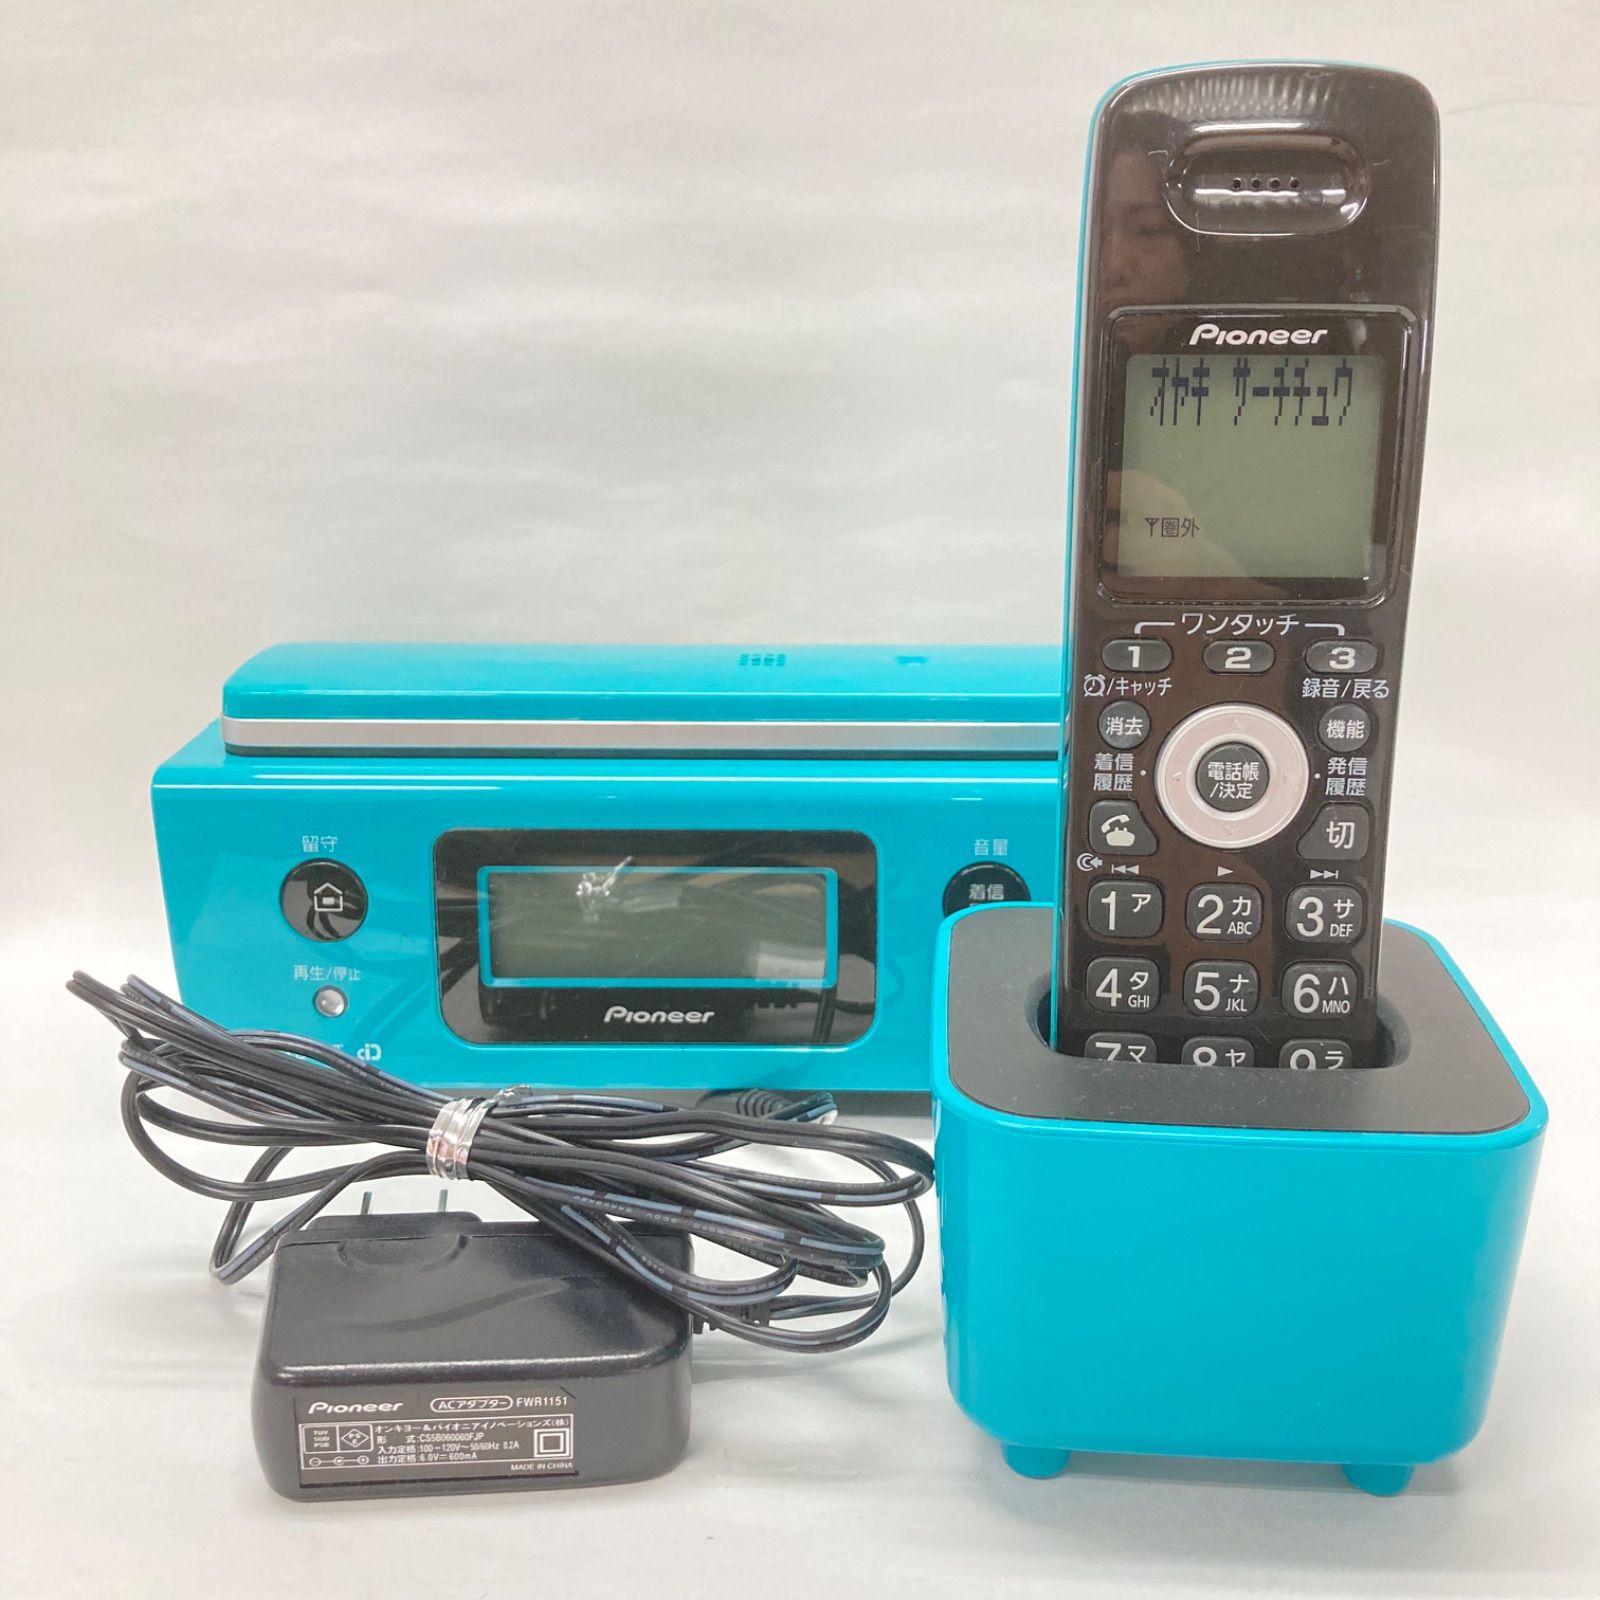 Pioneer(パイオニア) デジタルコードレス電話機 子機1台付 TF-FD31W-A ターコイズ 青 緑 中古 ジャンク - メルカリShops